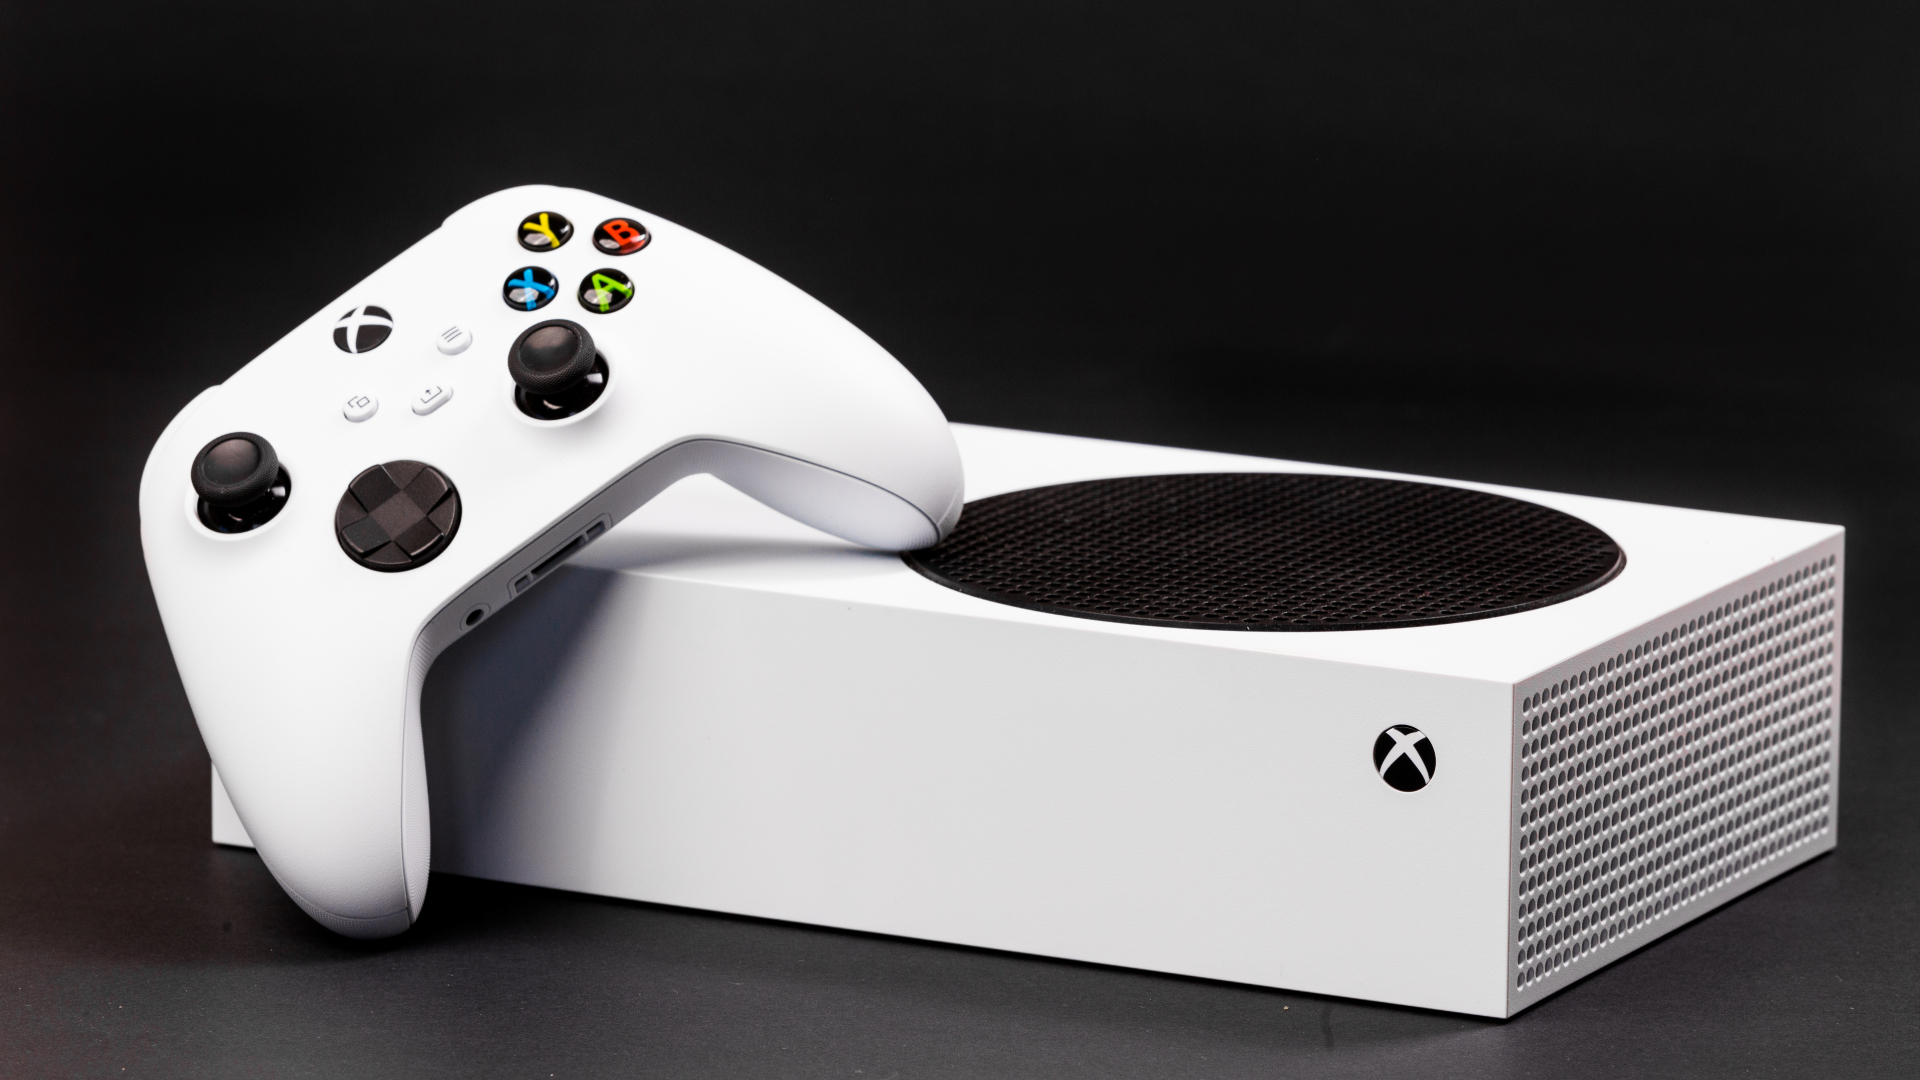 Xbox Series XS receives a price cut in Brazil - XboxEra